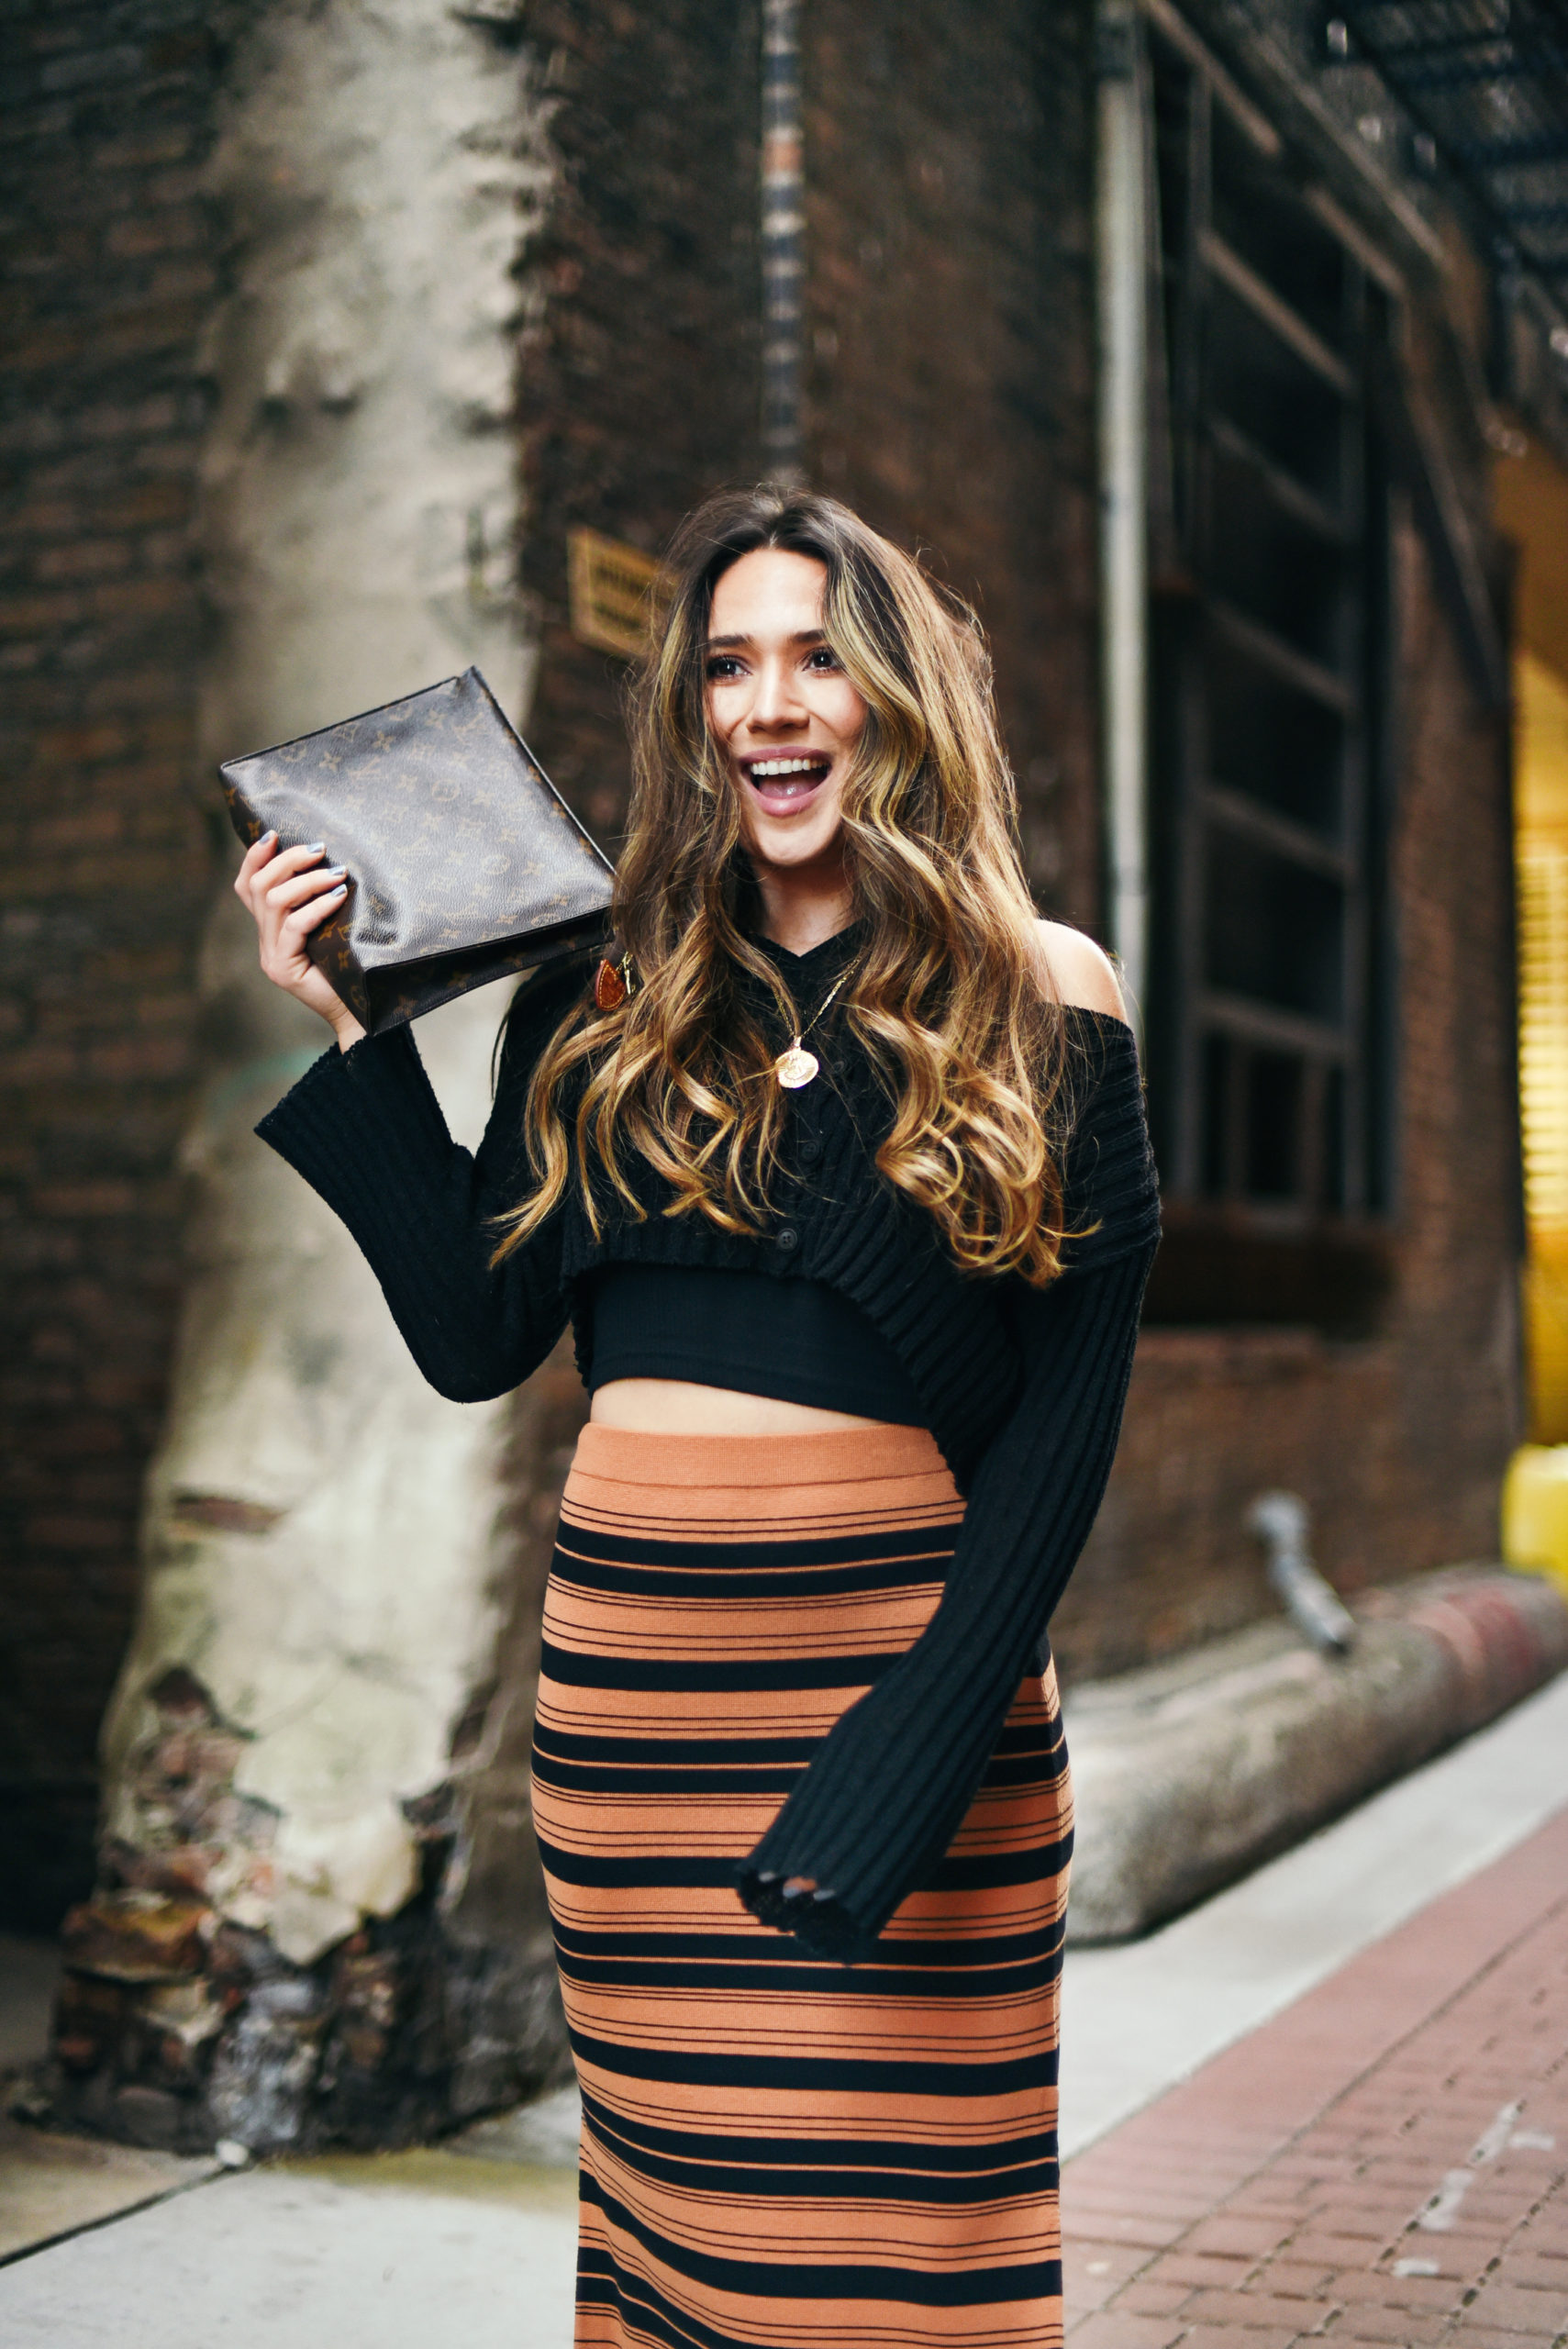 fall-fashion-sweater-knit-skirt-cropped-cardigan-street-style-fashion-inspo-look